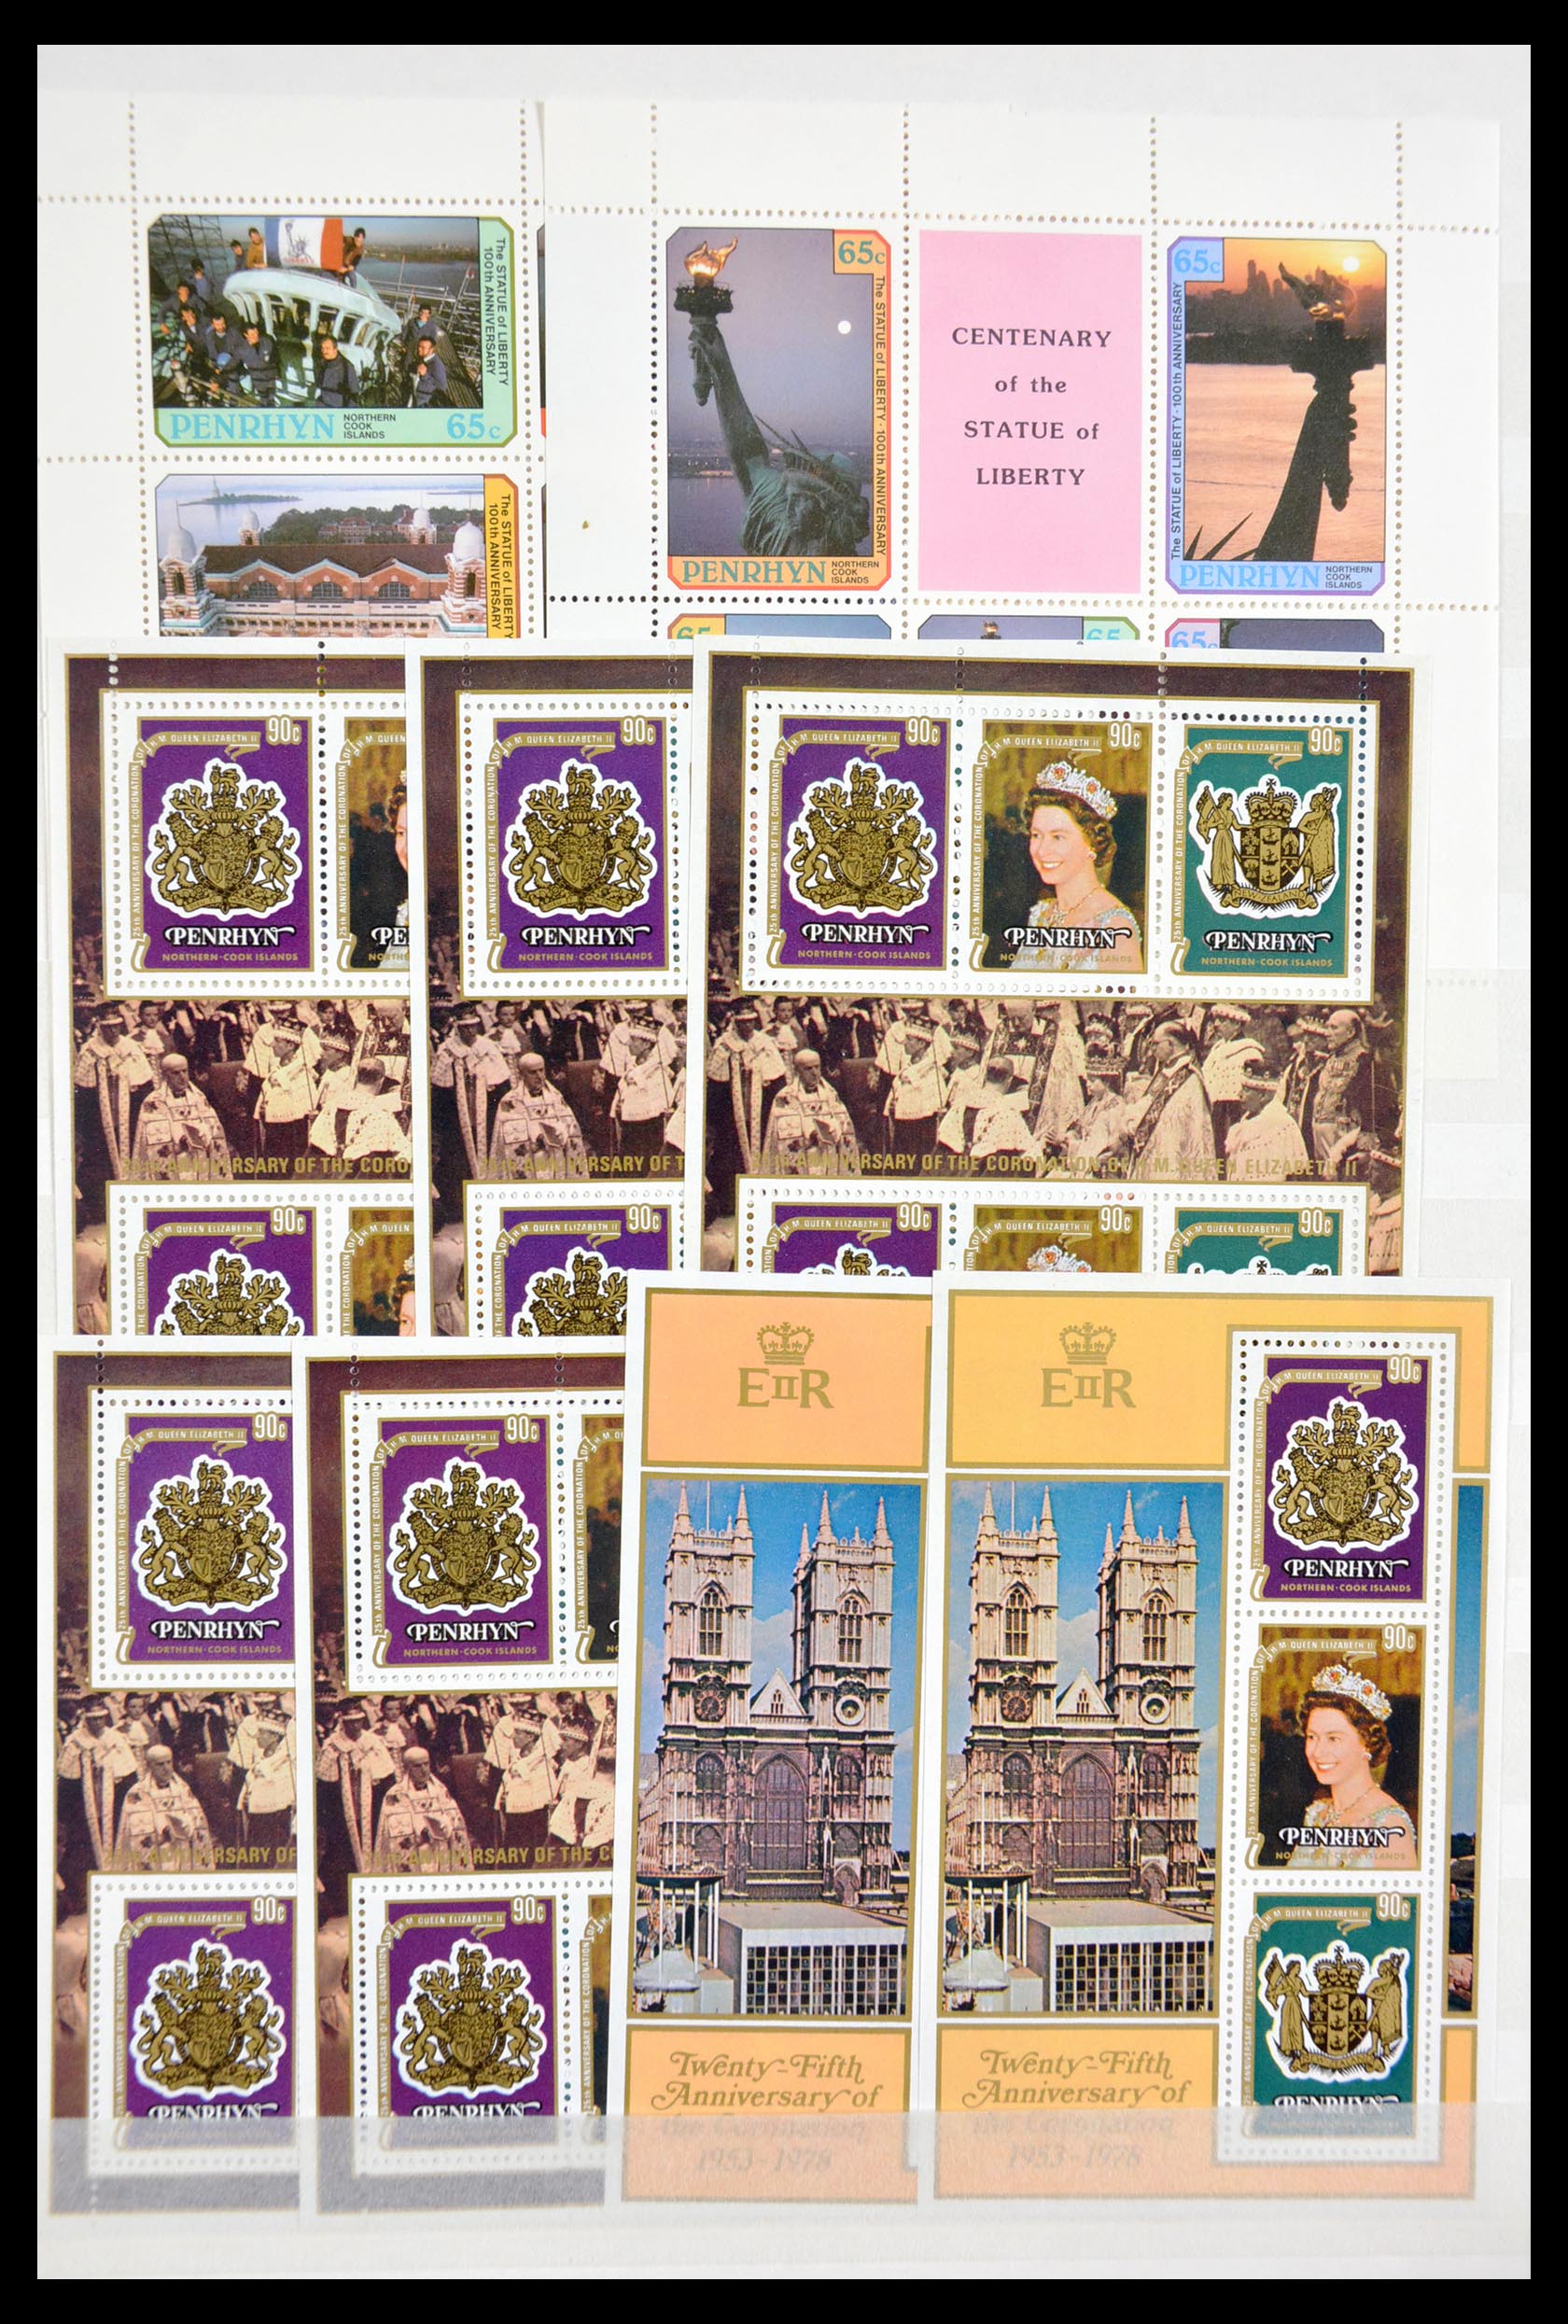 29584 077 - 29584 World souvenir sheets 1980-2011.